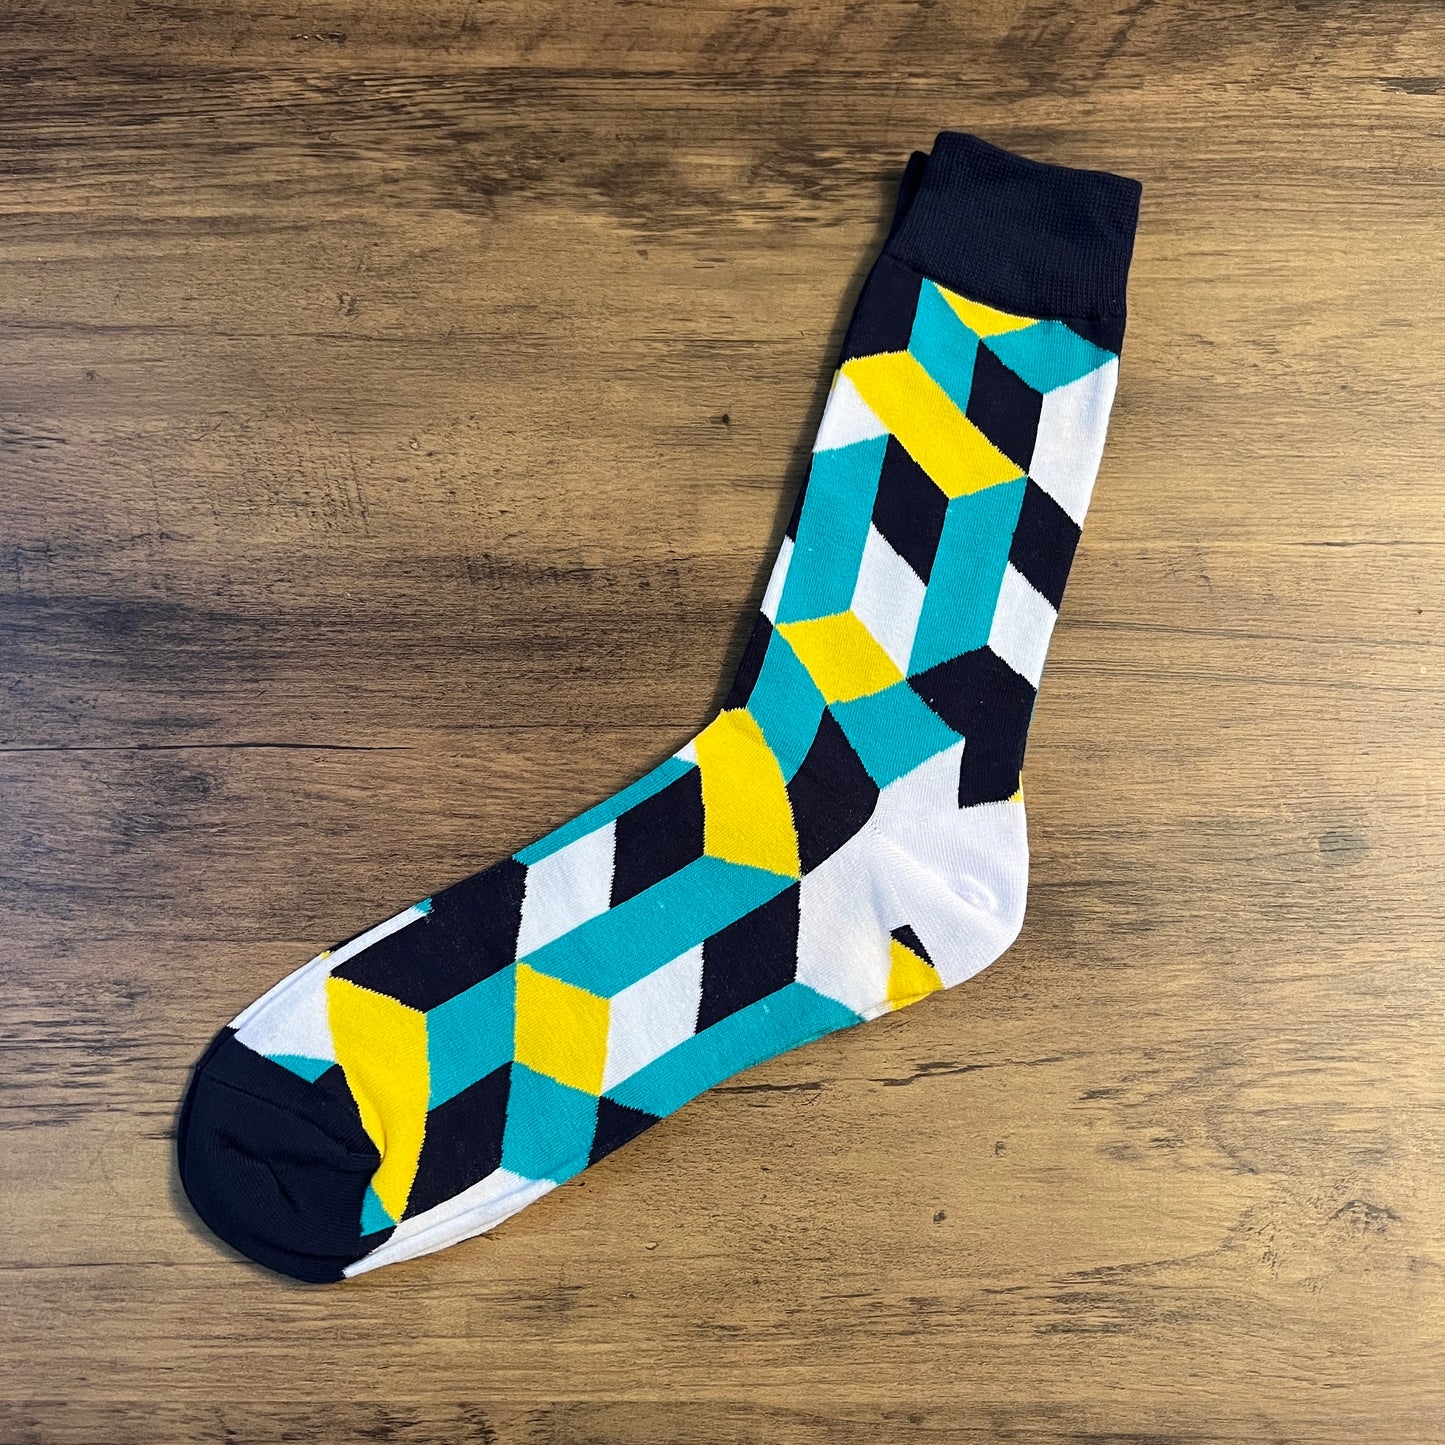 Tasker & Shaw | Luxury Menswear | Navy, teal, white and yellow geometric pattern socks